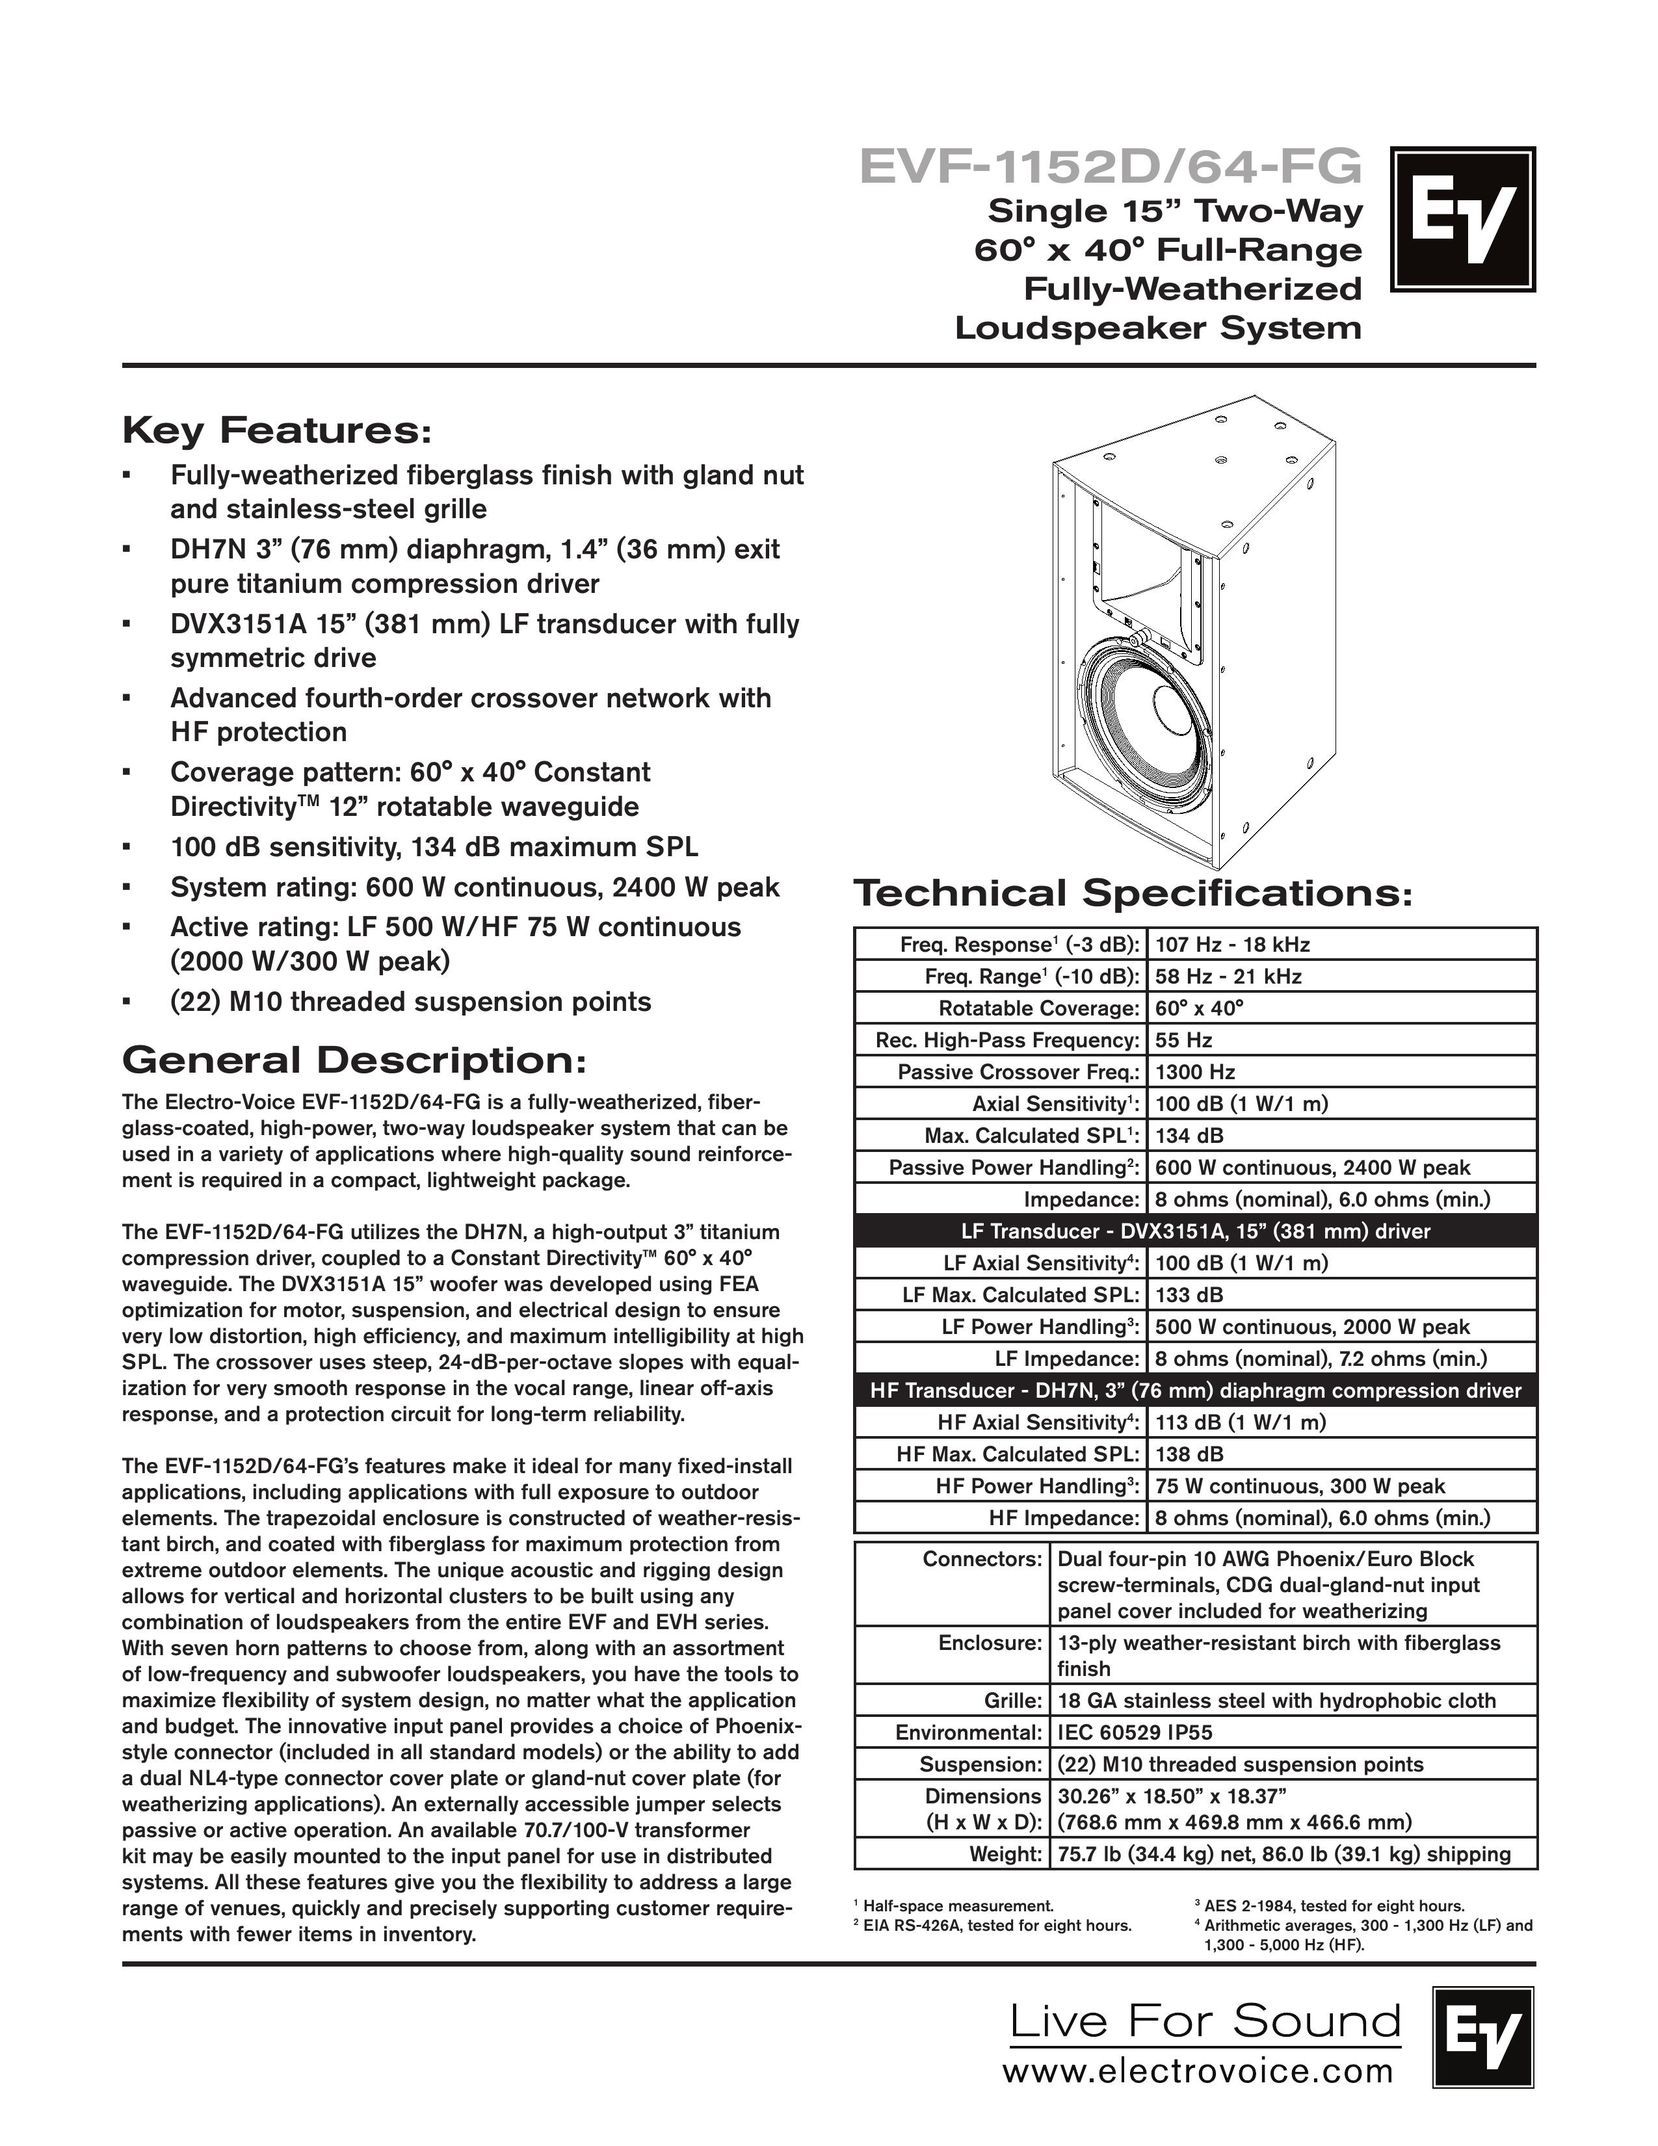 Electro-Voice EVF-1152D/64-FG Speaker System User Manual